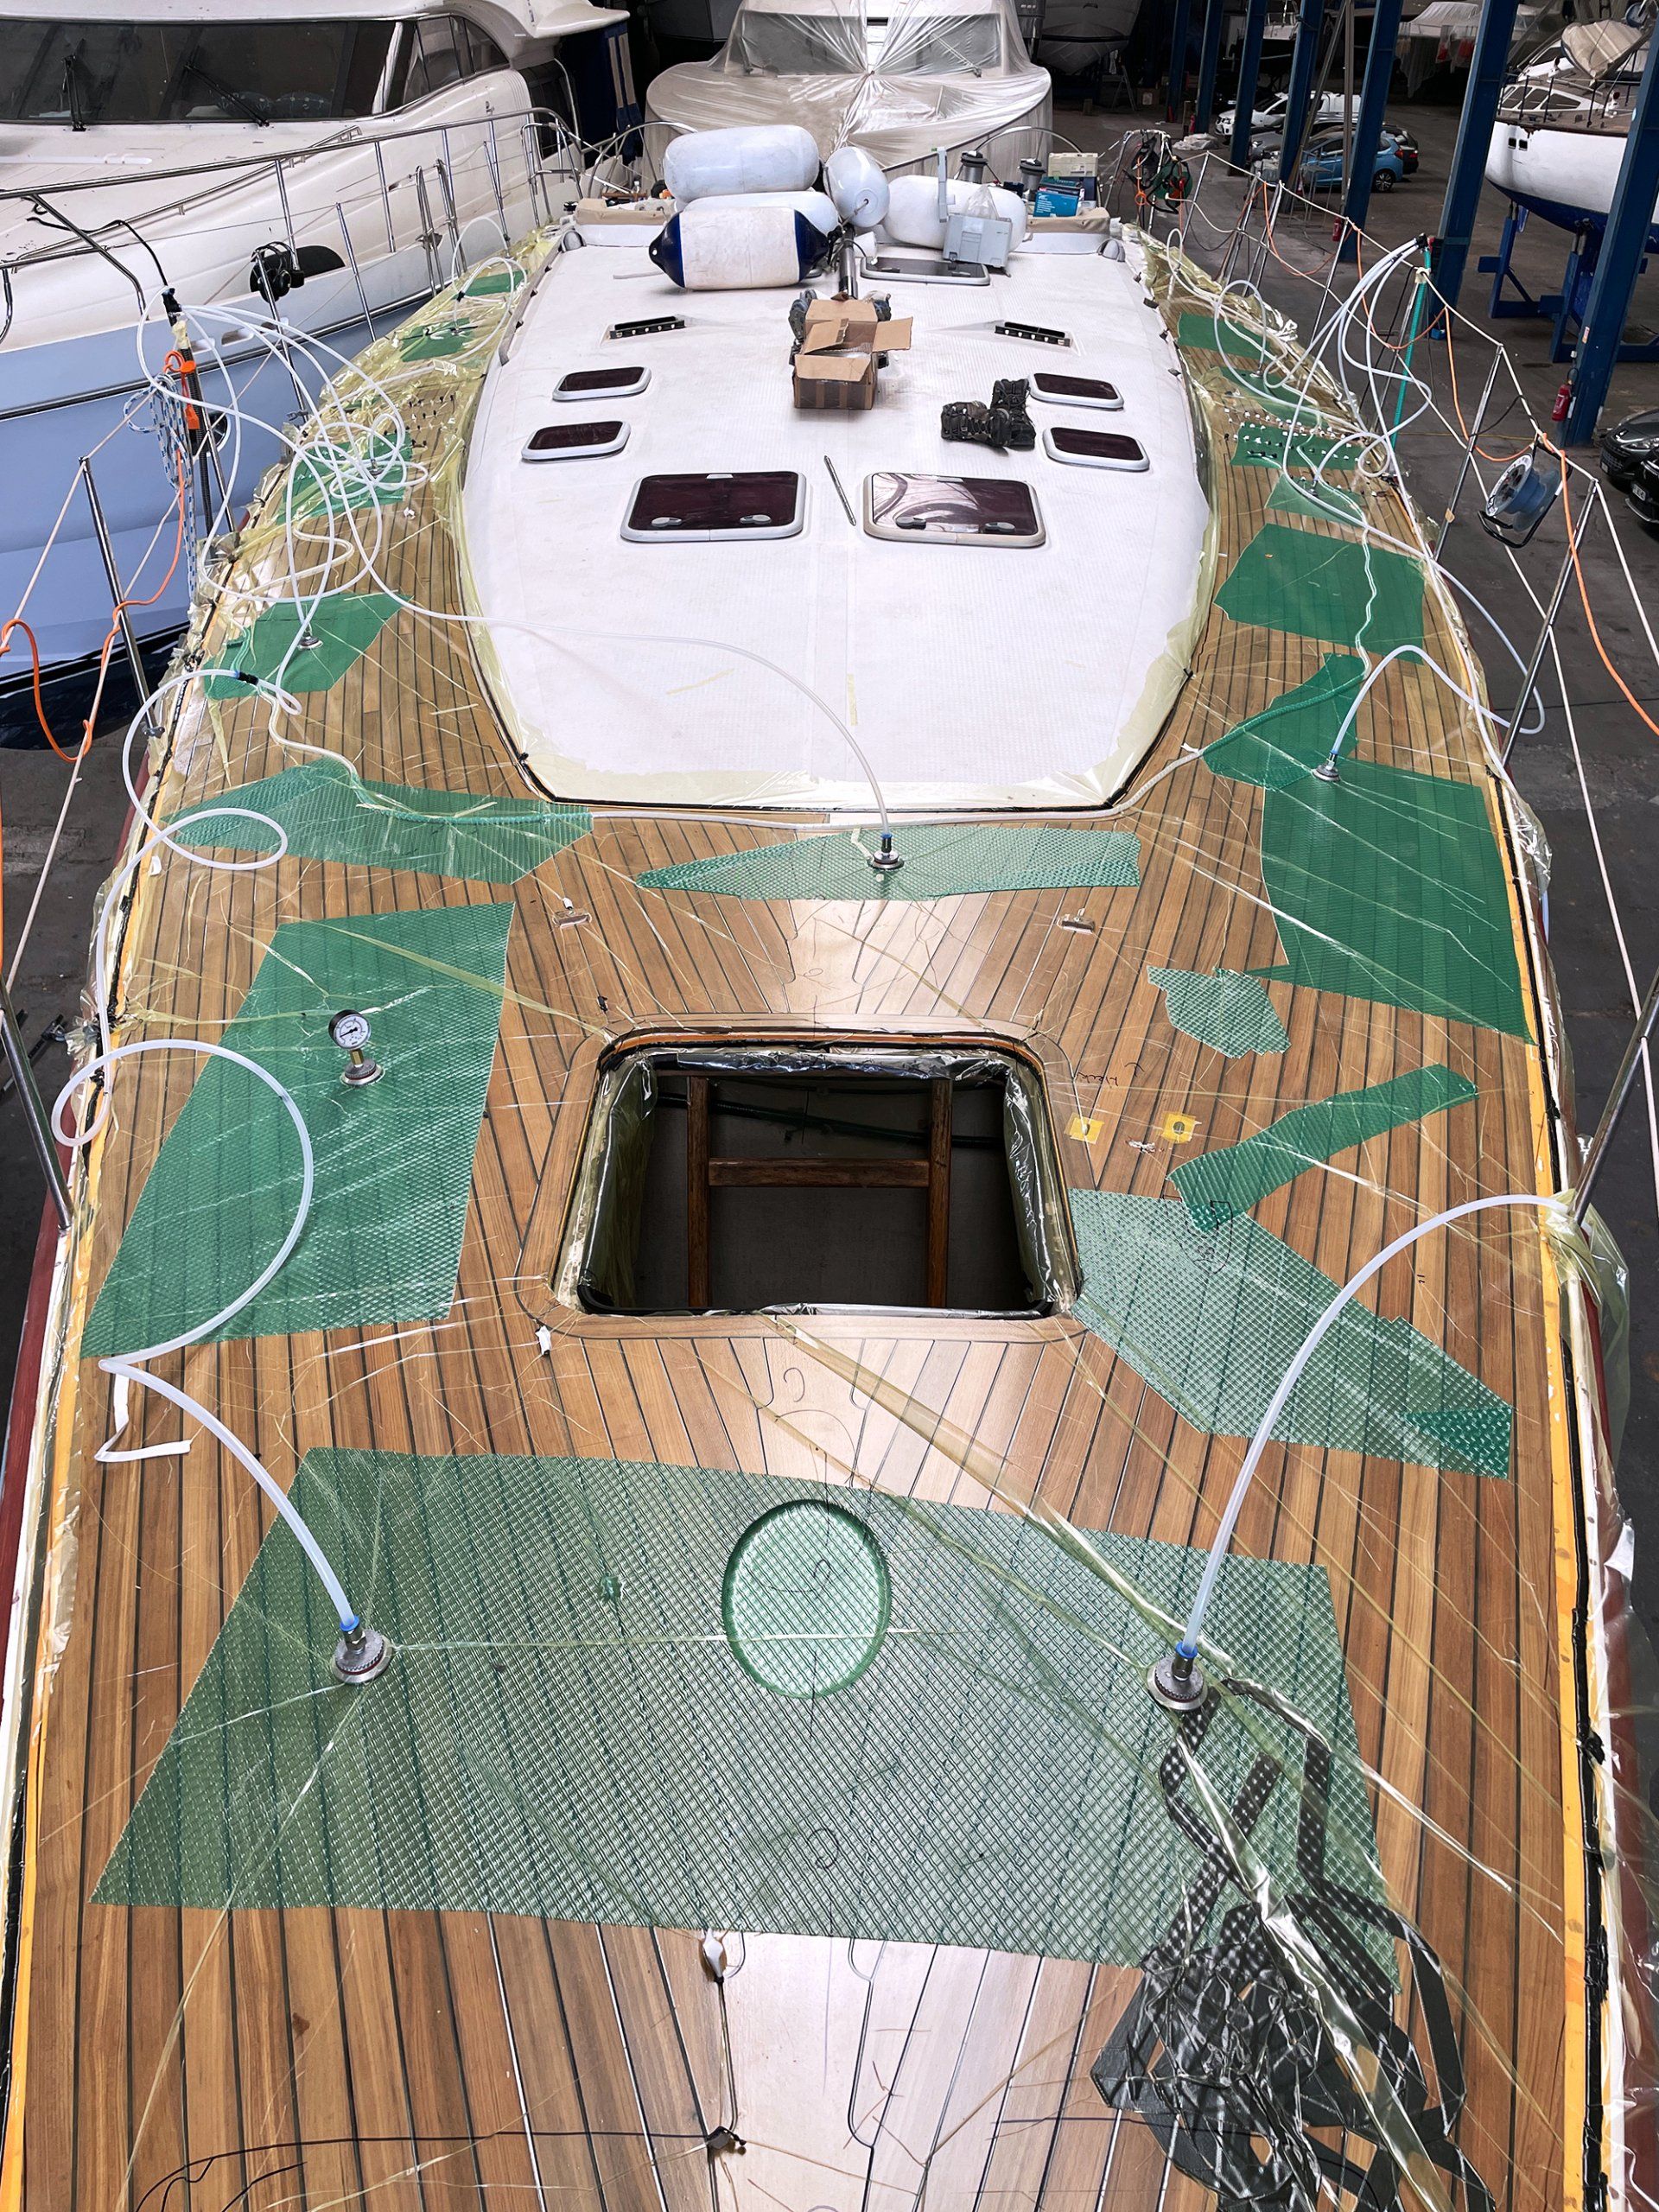 A new teak deck is vacuum-bonded to a Futuna 57 by Mobilerbootsbau teak decking company